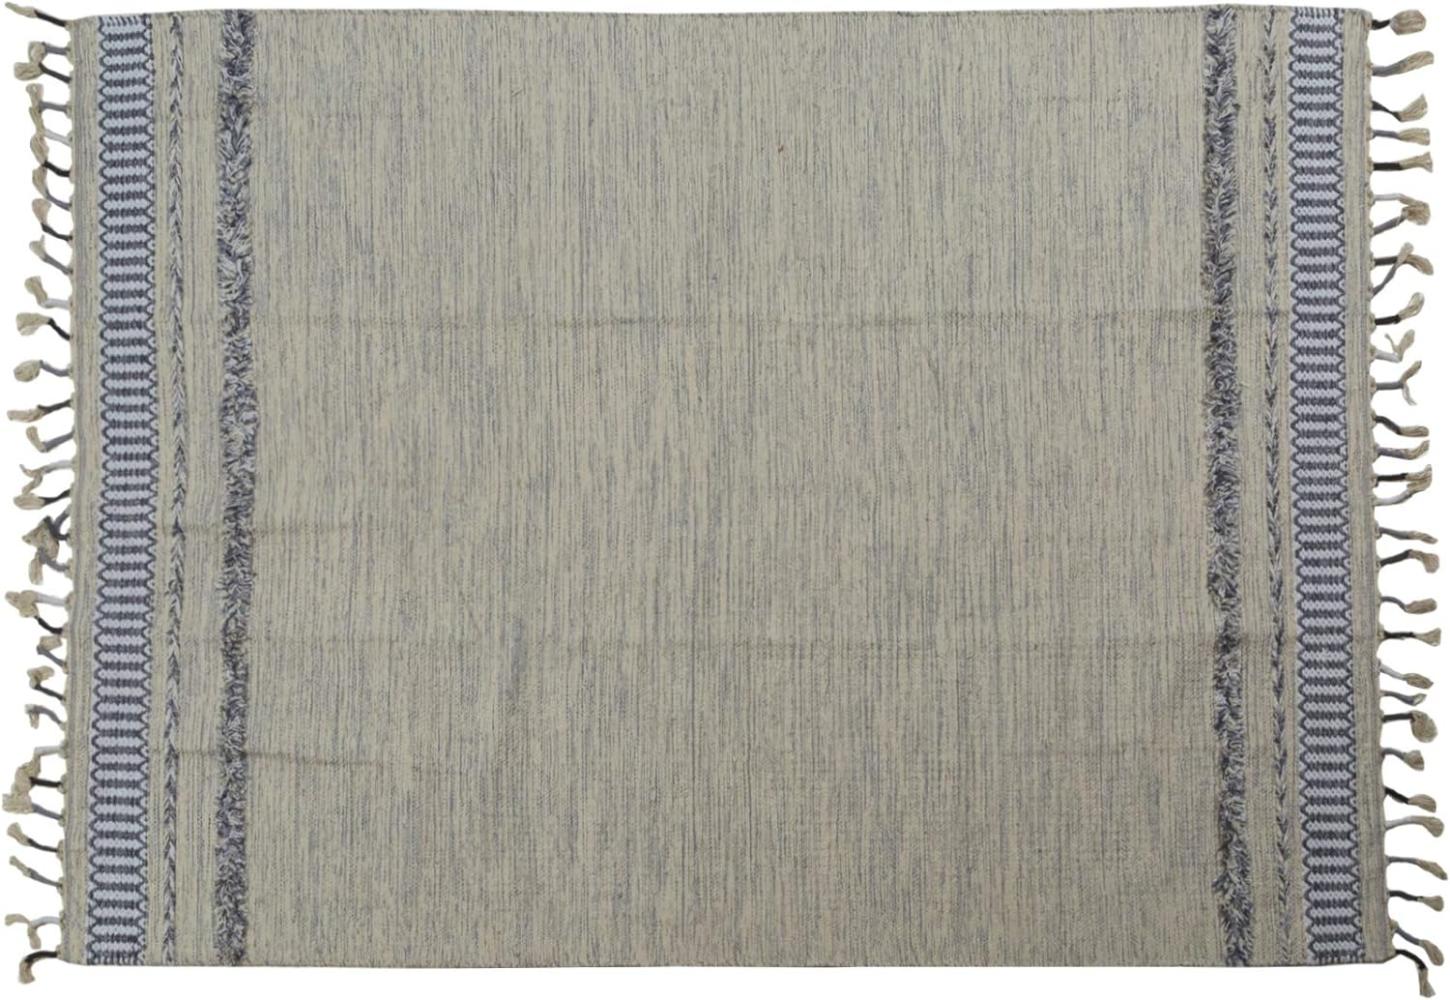 Dmora Moderner Boston-Teppich, Kelim-Stil, 100% Baumwolle, grau, 200x140cm Bild 1